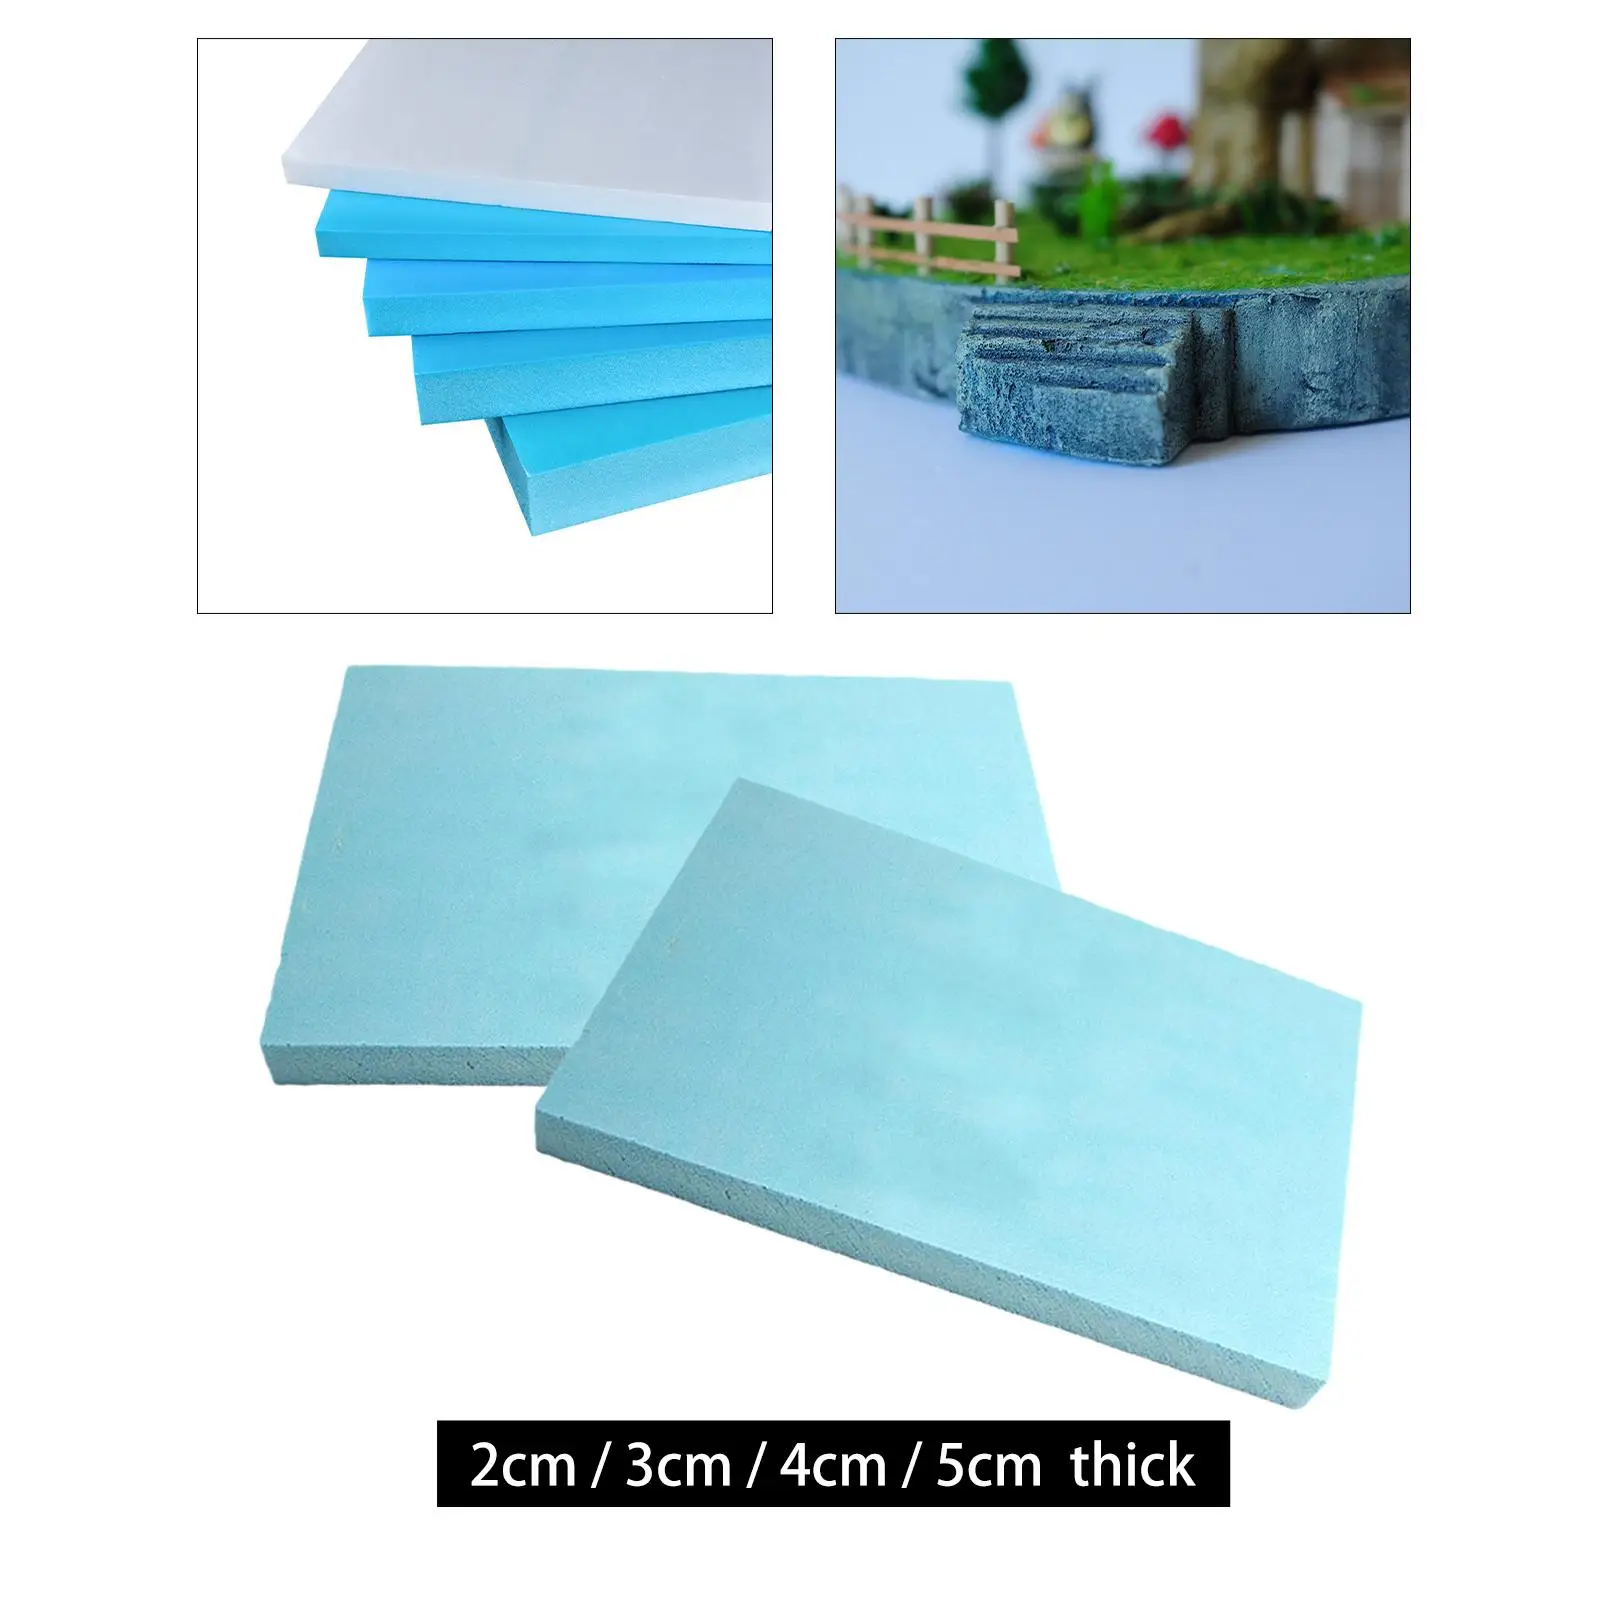 2x Craft Board Foam DIY Landscape Scenery Building Modelling Foam Plate Foam Slab Diorama Base for Hobby Arts Crafts Scenic